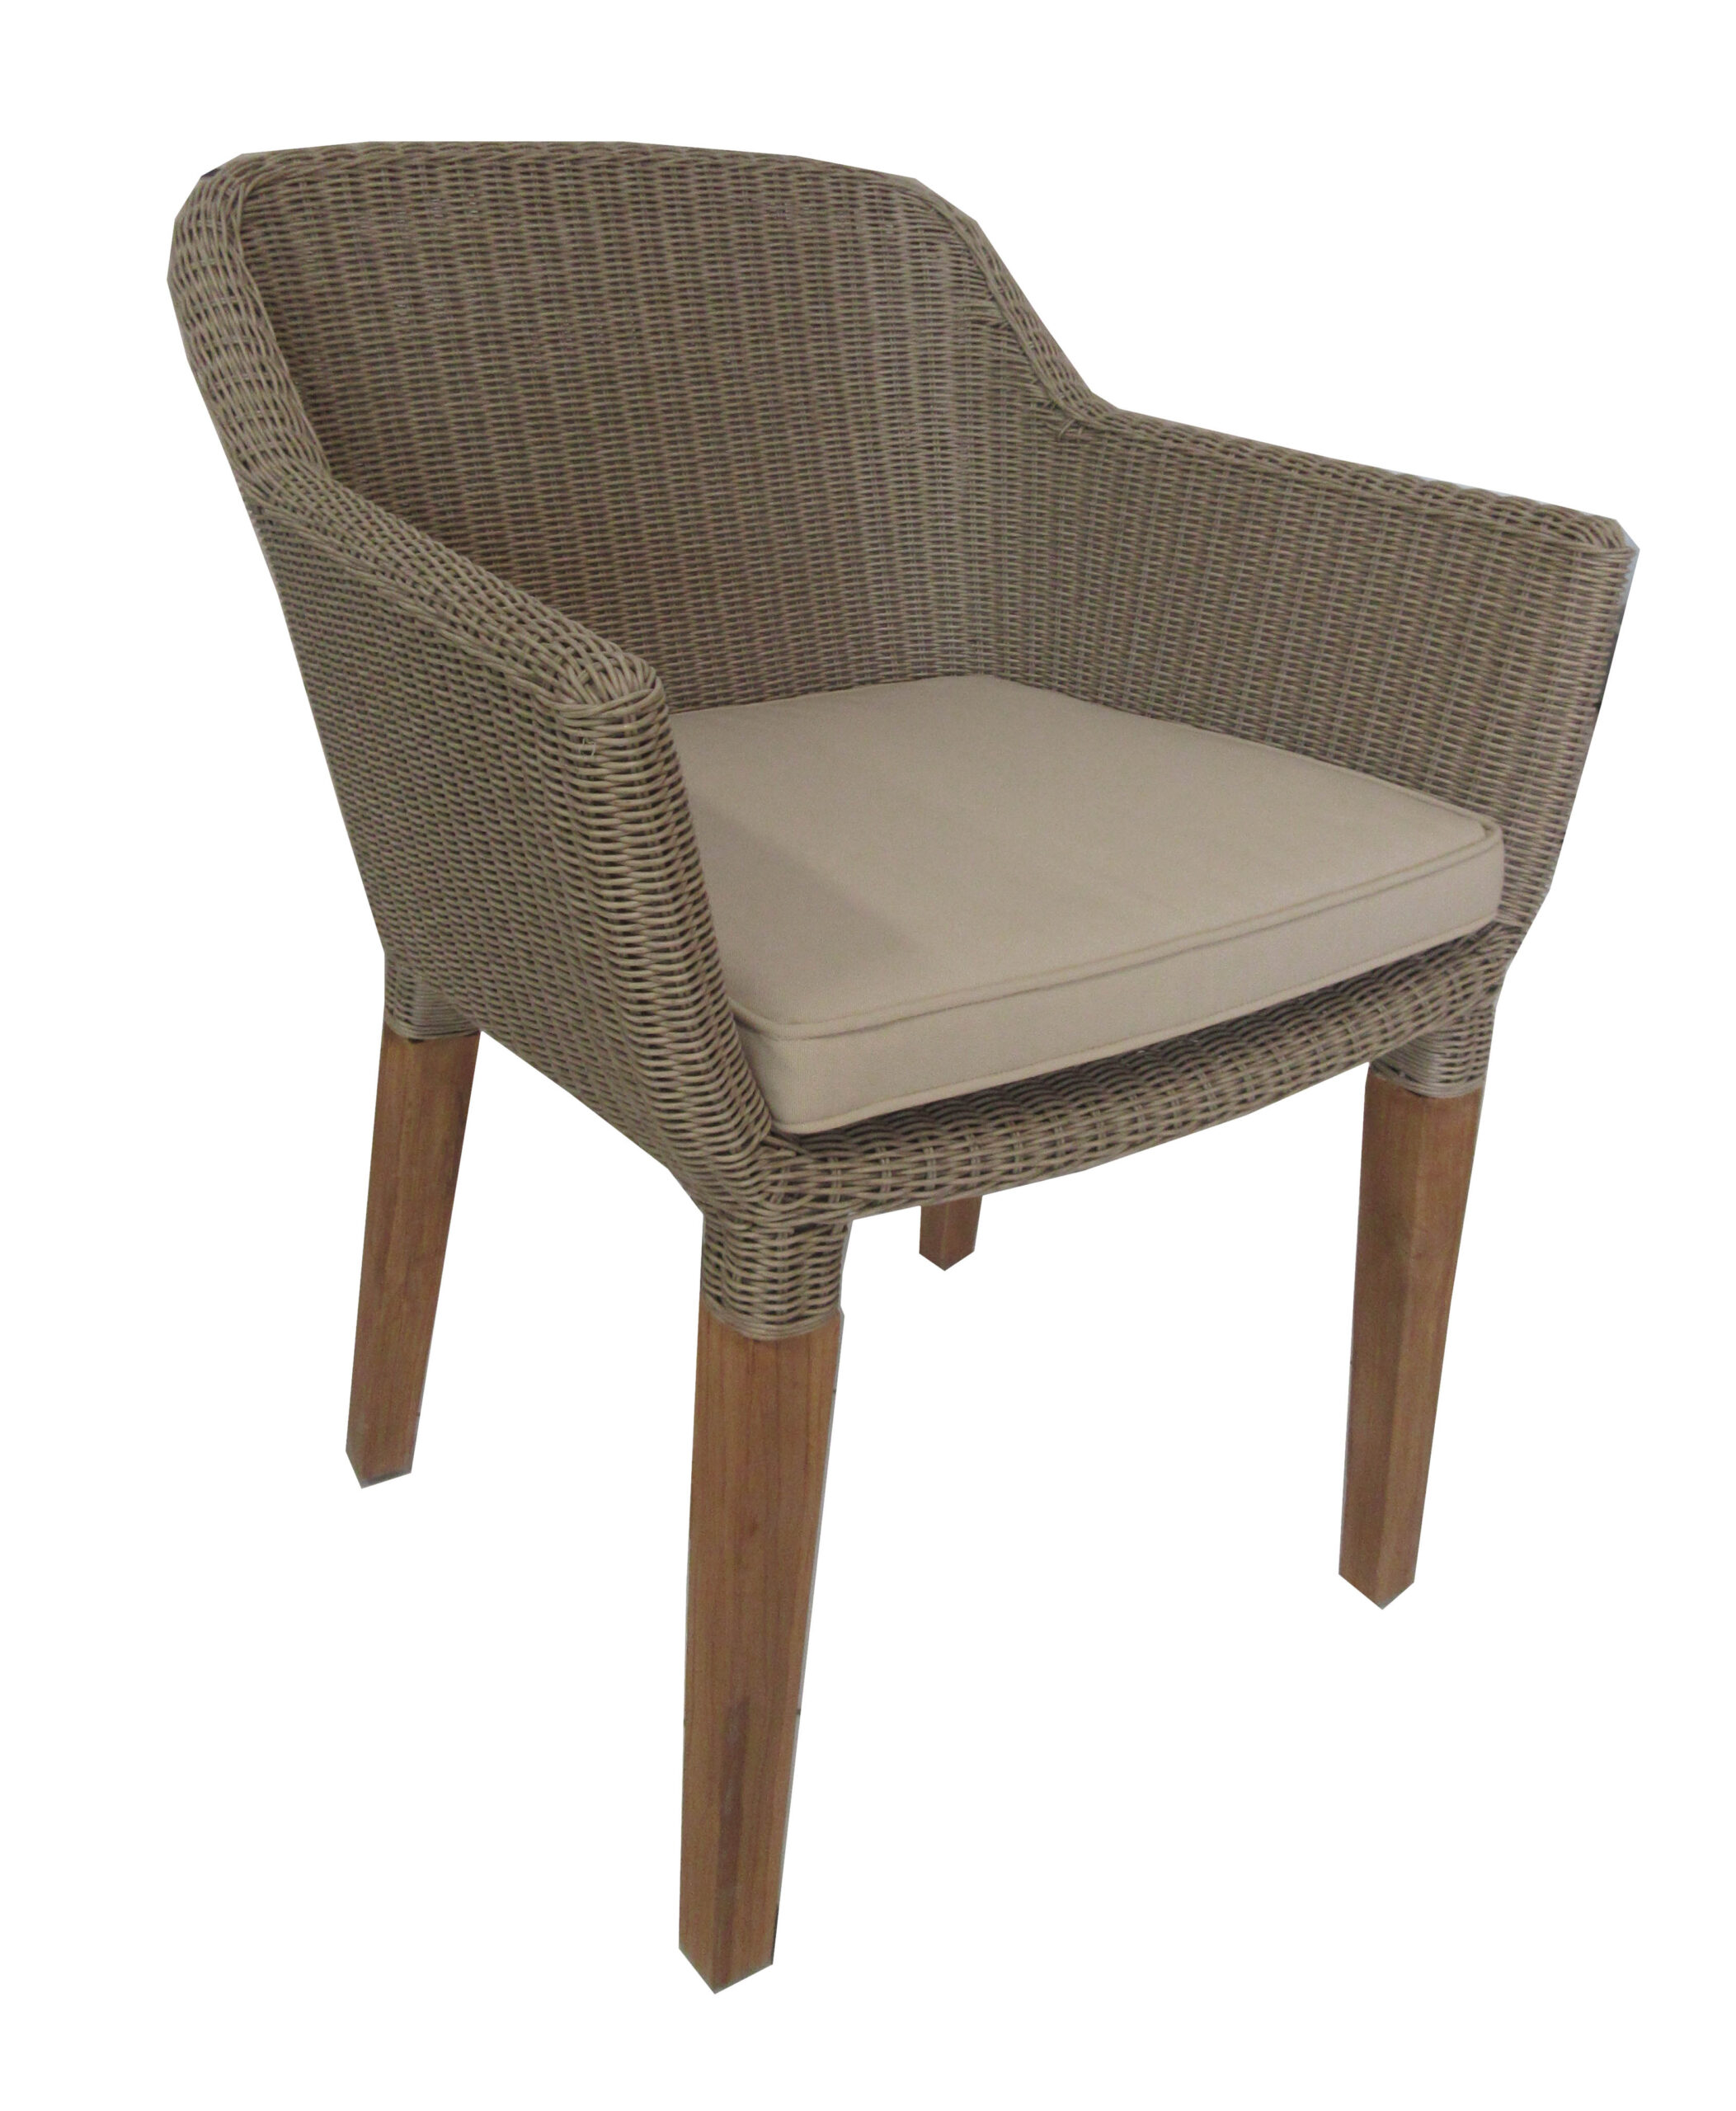 Angela Arm Chair
62x66x80 cm